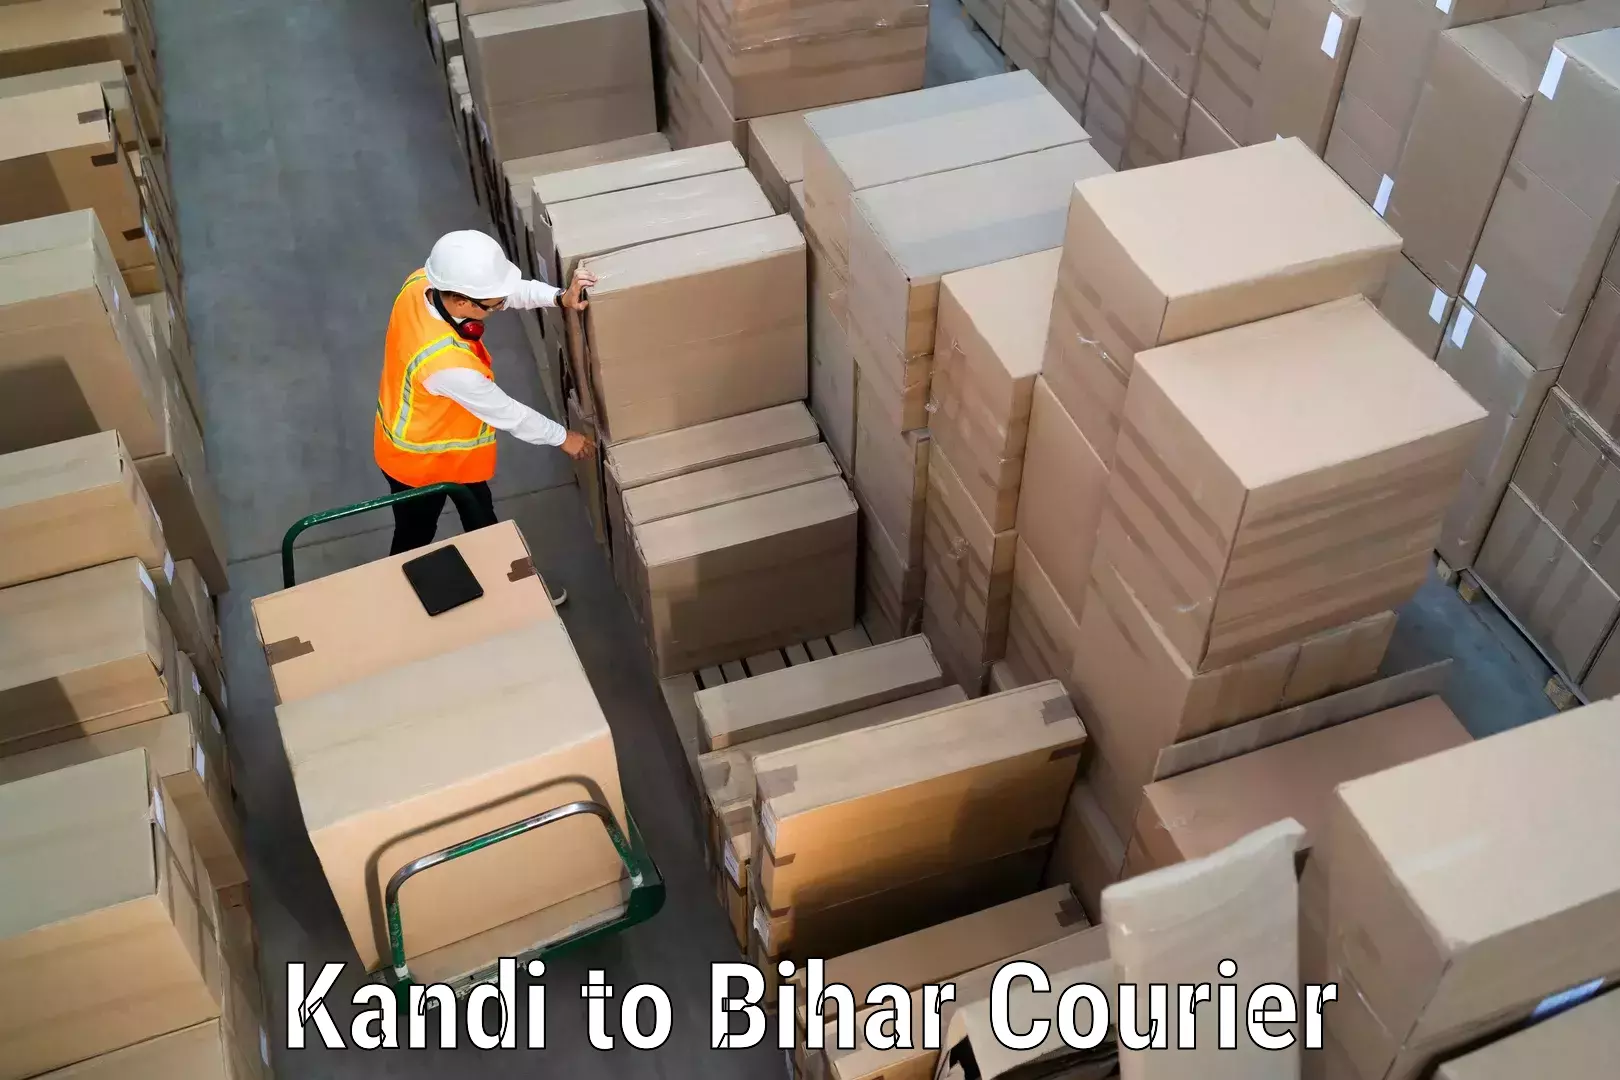 Remote area delivery in Kandi to Biraul